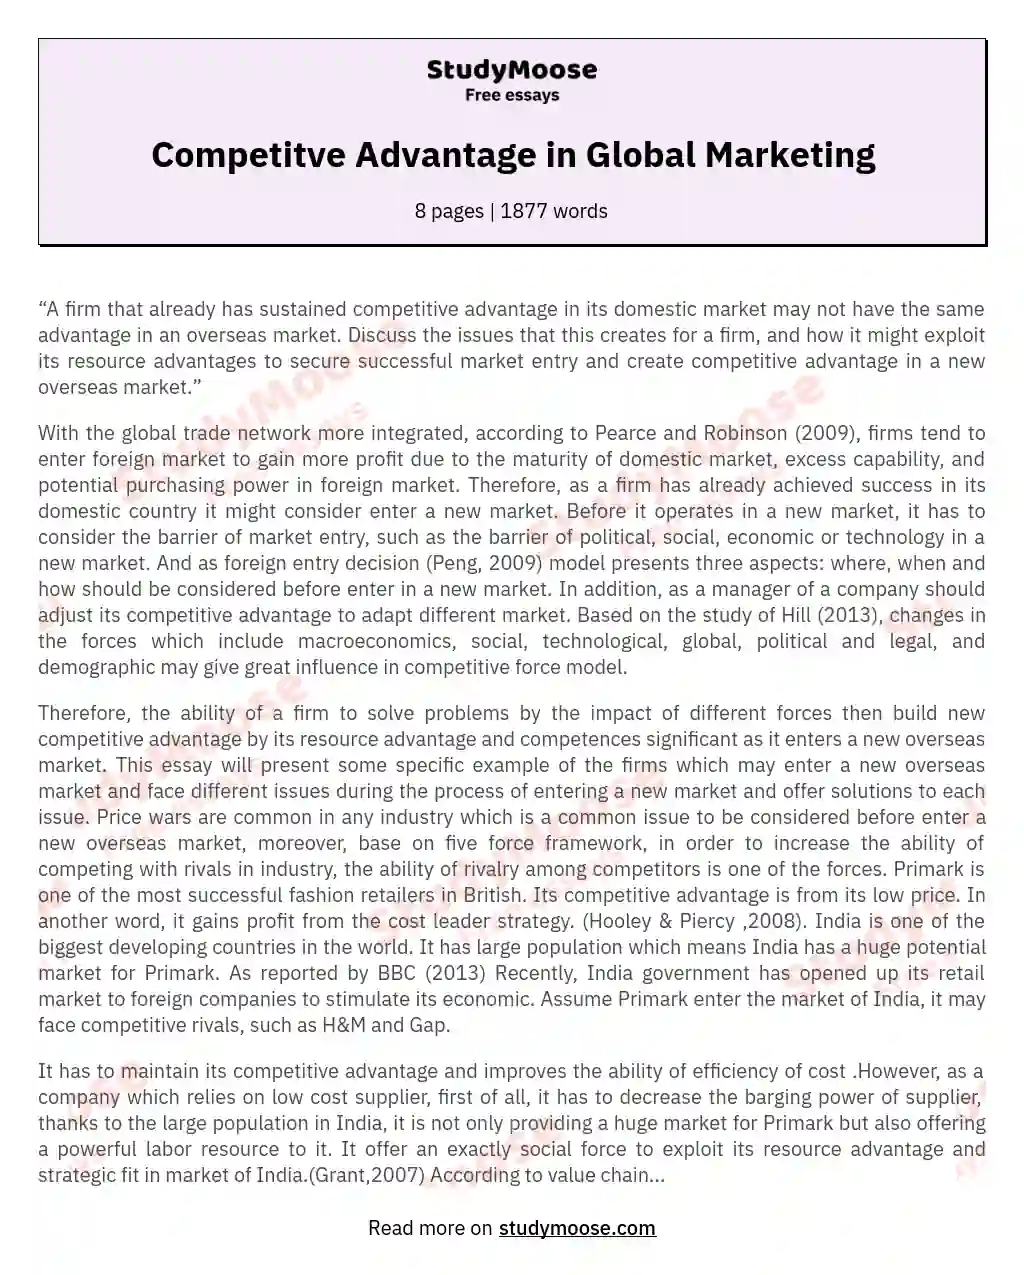 Competitve Advantage in Global Marketing essay